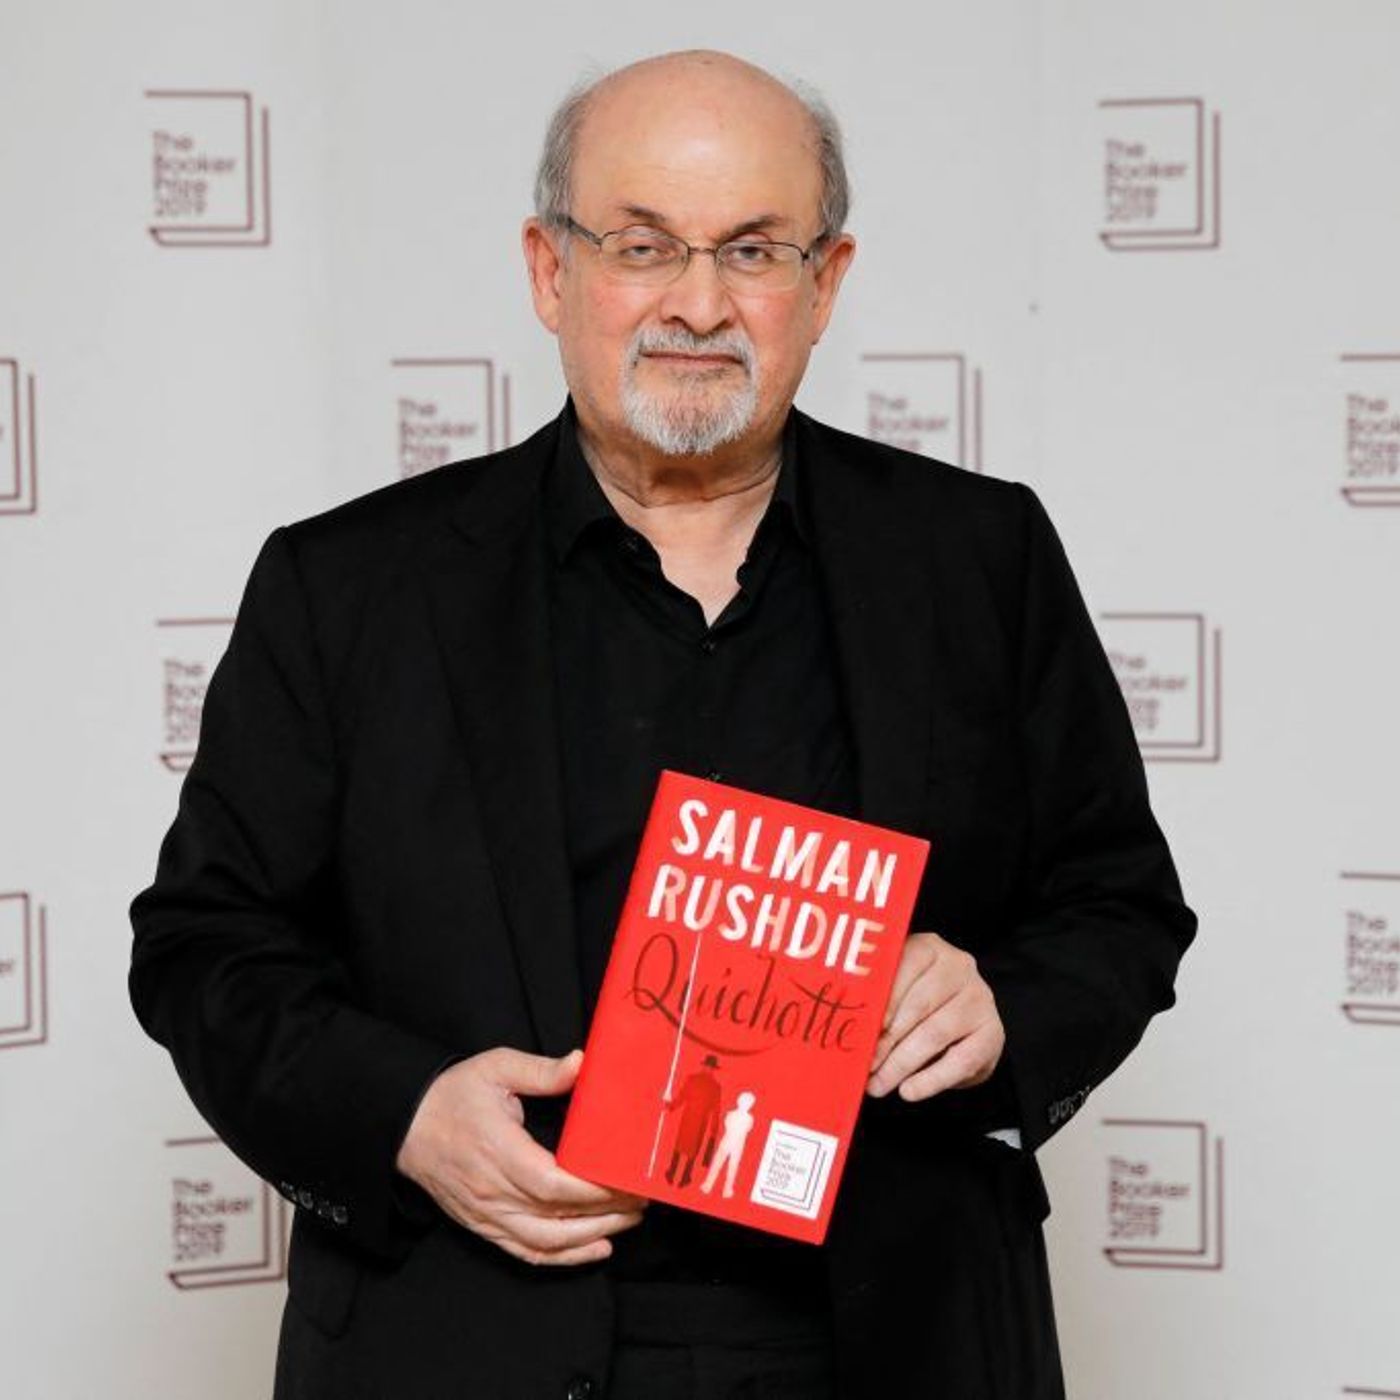 Salman Rushdie: Quichotte